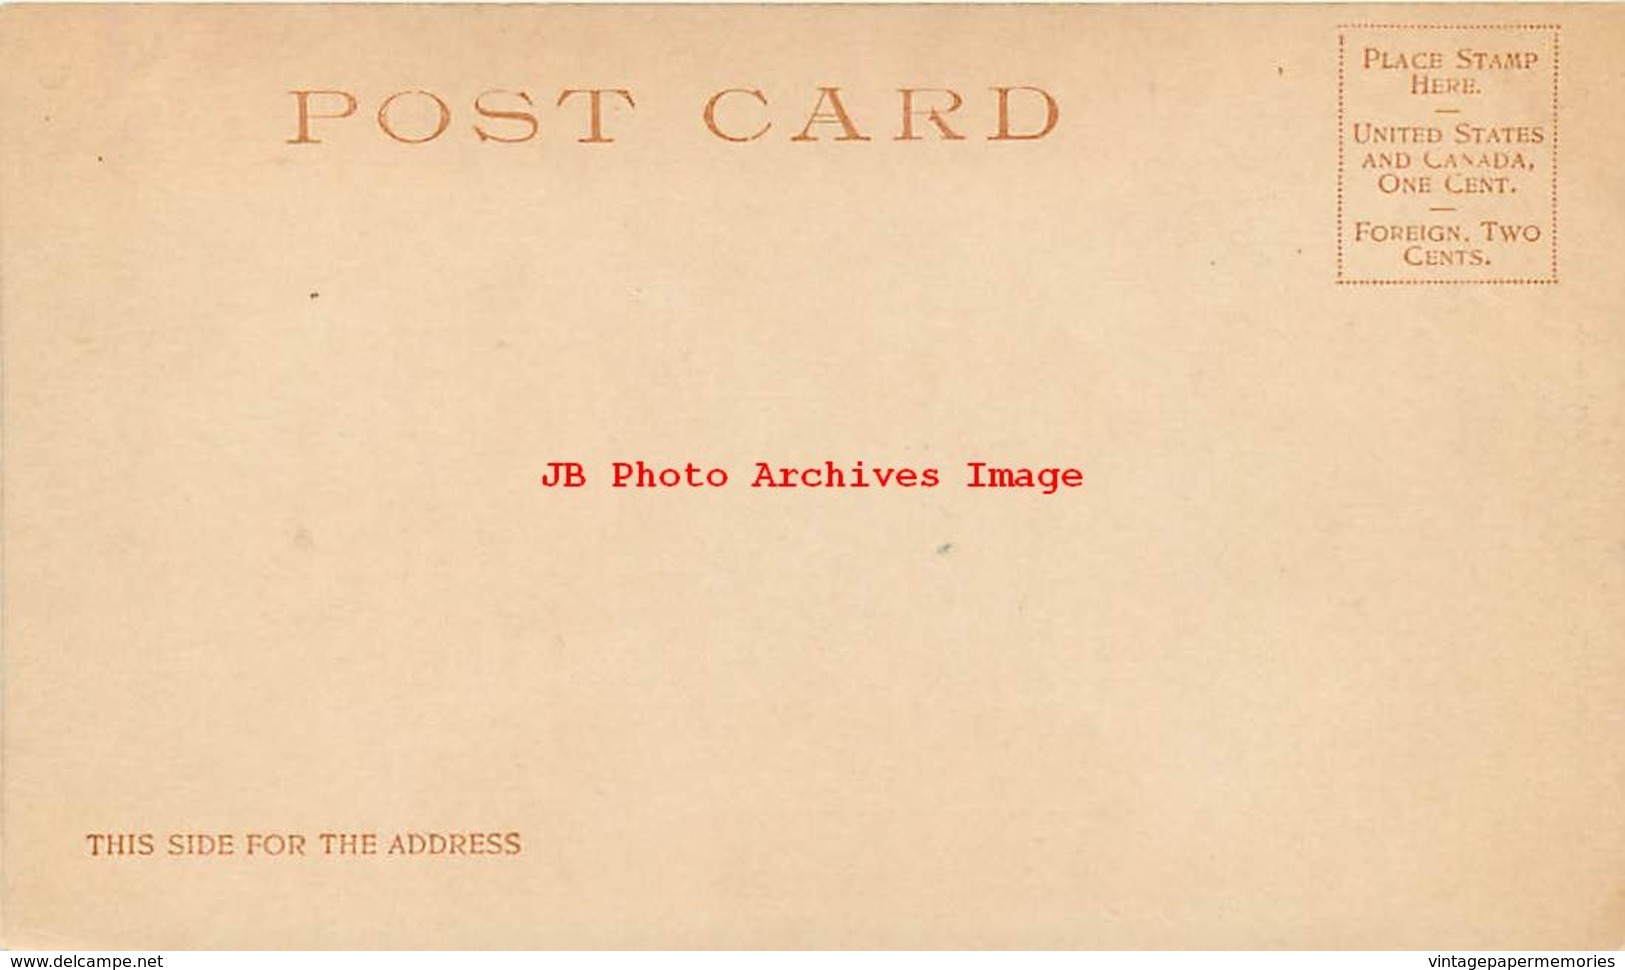 281401-Montana, Butte, School Of Mines, Detroit Photographic Co, 1903, No 6914 - Butte